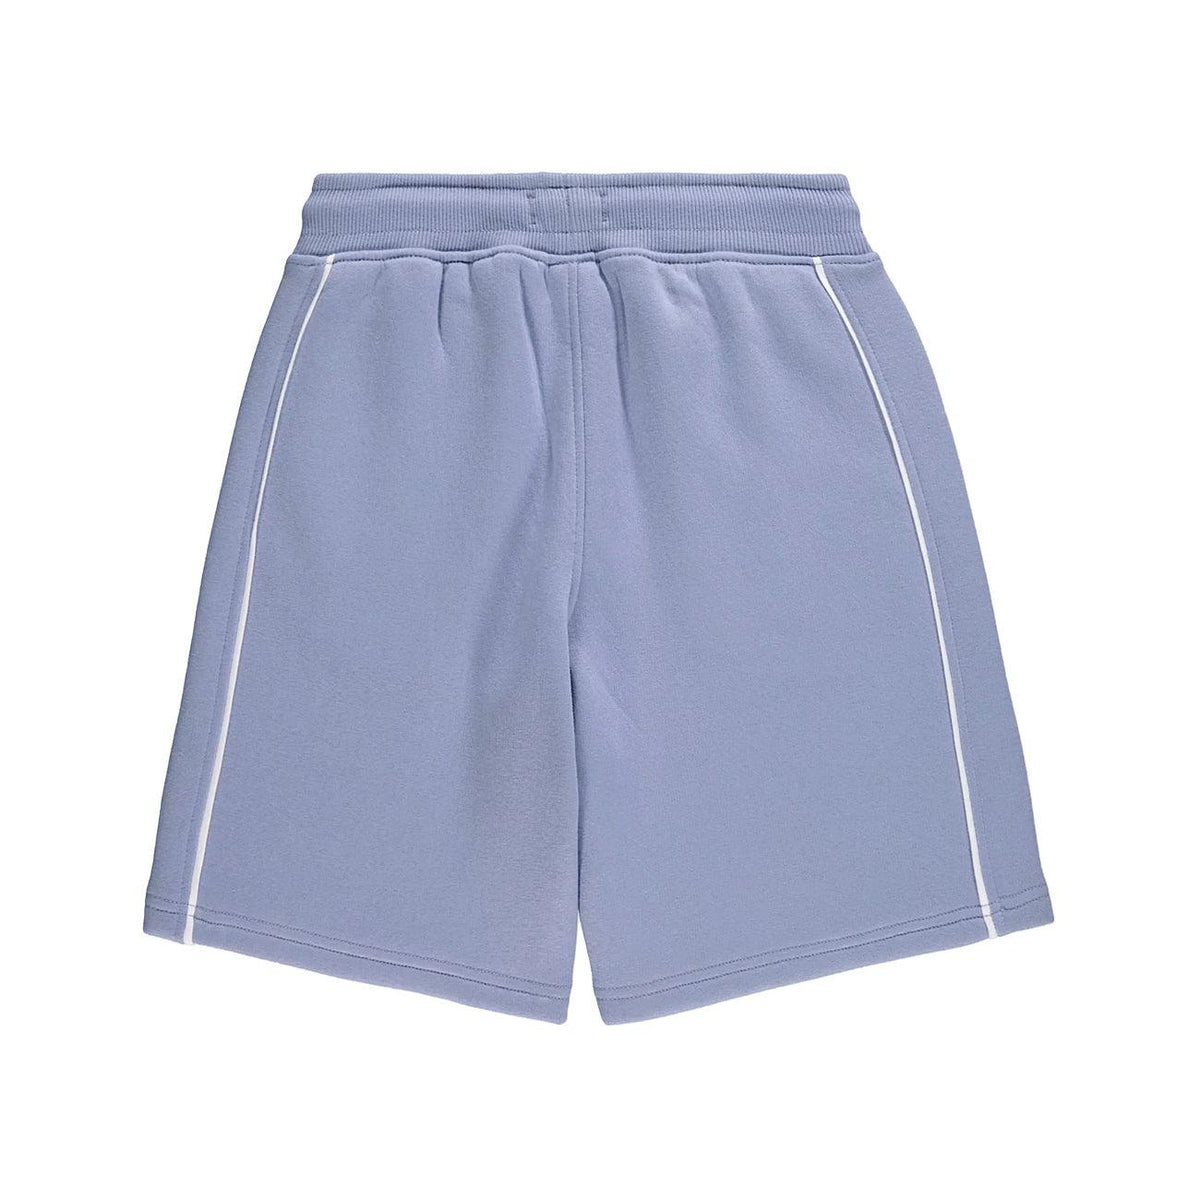 Premium Quality Soft Cotton Stripe Fleece Short For Boy (HO-11688) - Brands River